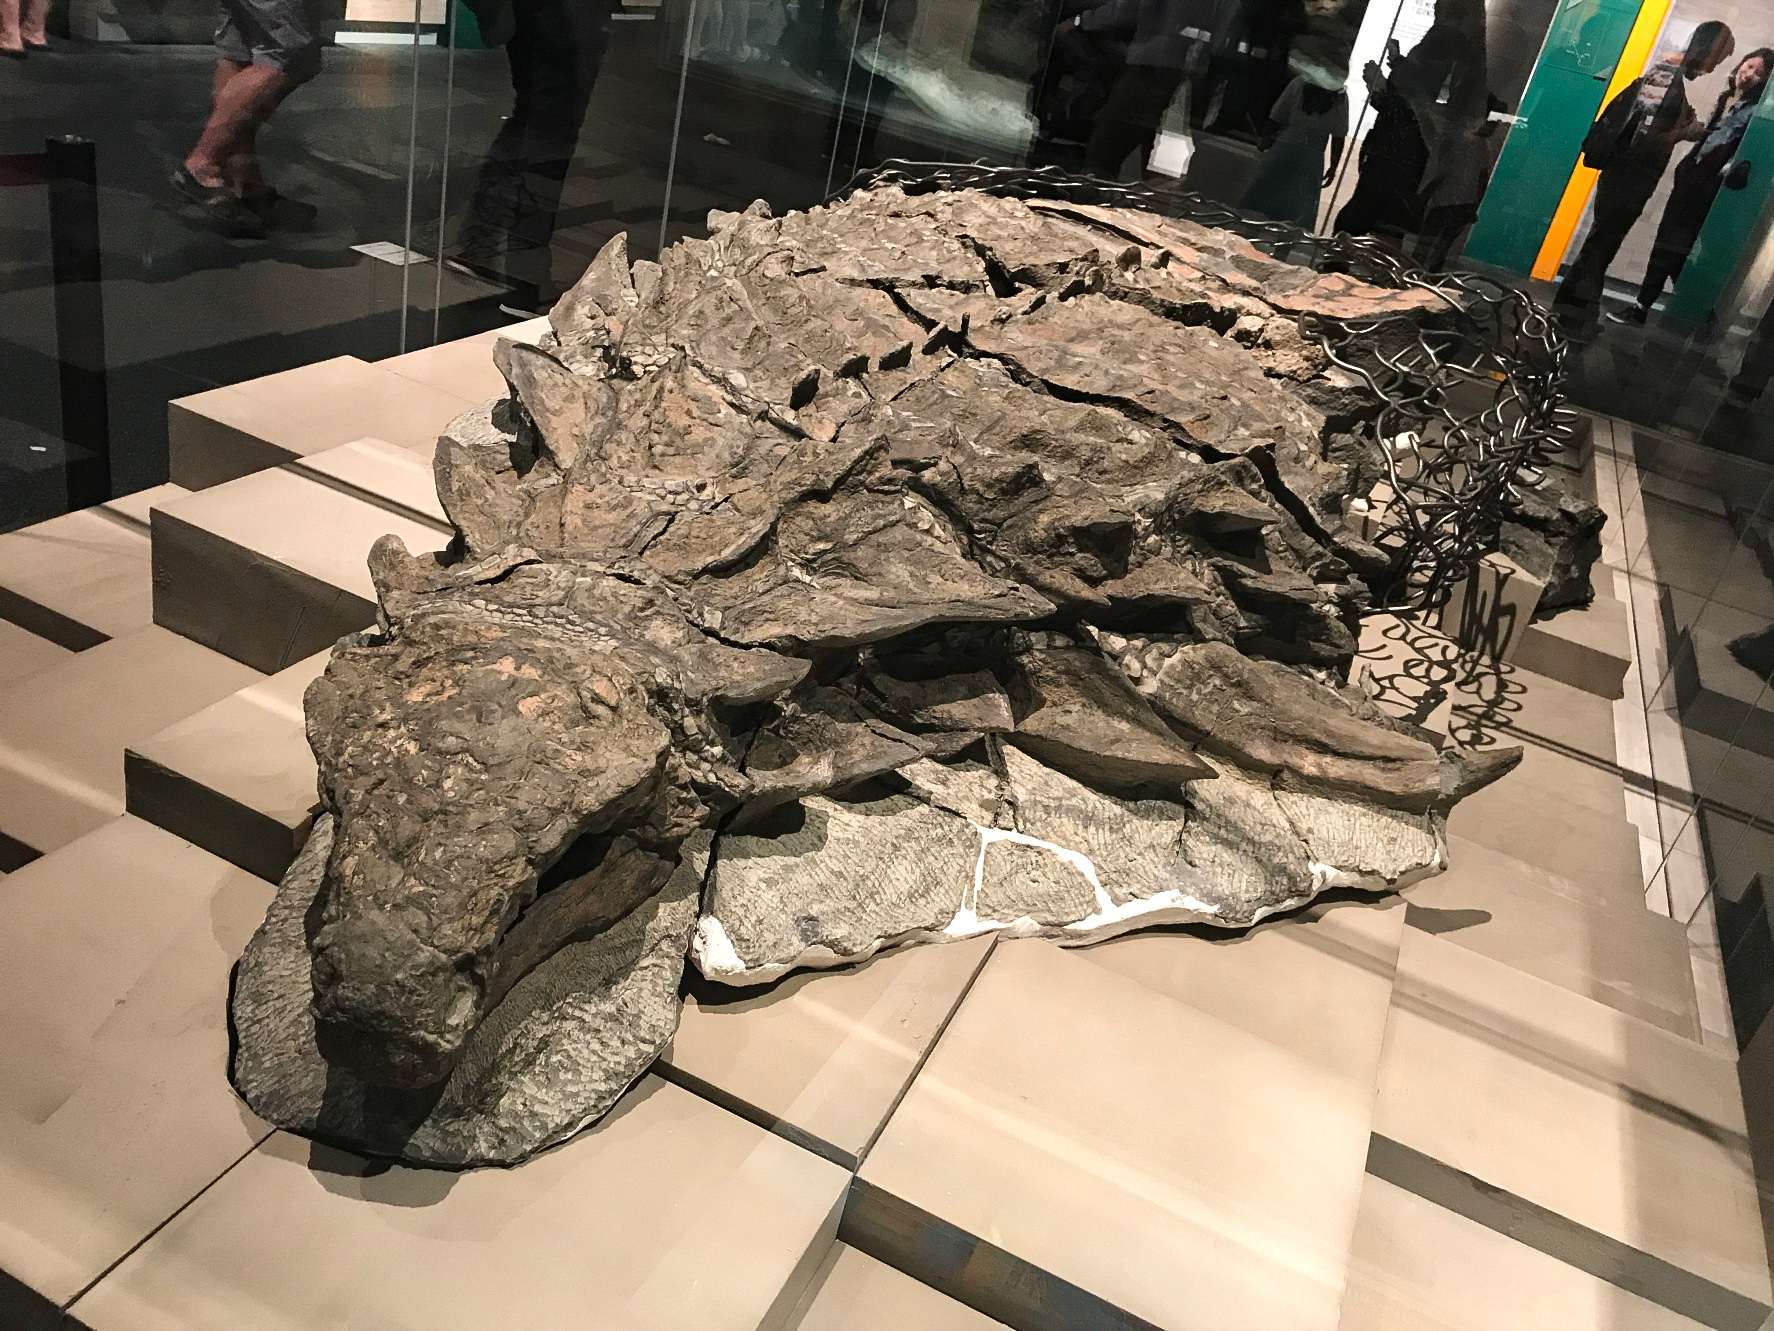 Borealopelta (หมายถึง "โล่เหนือ") เป็นสกุลของ nodosaurid ankylosaur จากยุคครีเทเชียสตอนต้นของอัลเบอร์ตาประเทศแคนาดา ประกอบด้วยสายพันธุ์เดียวคือ B. markmitchelli ซึ่งได้รับการตั้งชื่อในปี 2017 โดย Caleb Brown และเพื่อนร่วมงานจากตัวอย่าง Suncor nodosaur ที่ได้รับการอนุรักษ์ไว้เป็นอย่างดี